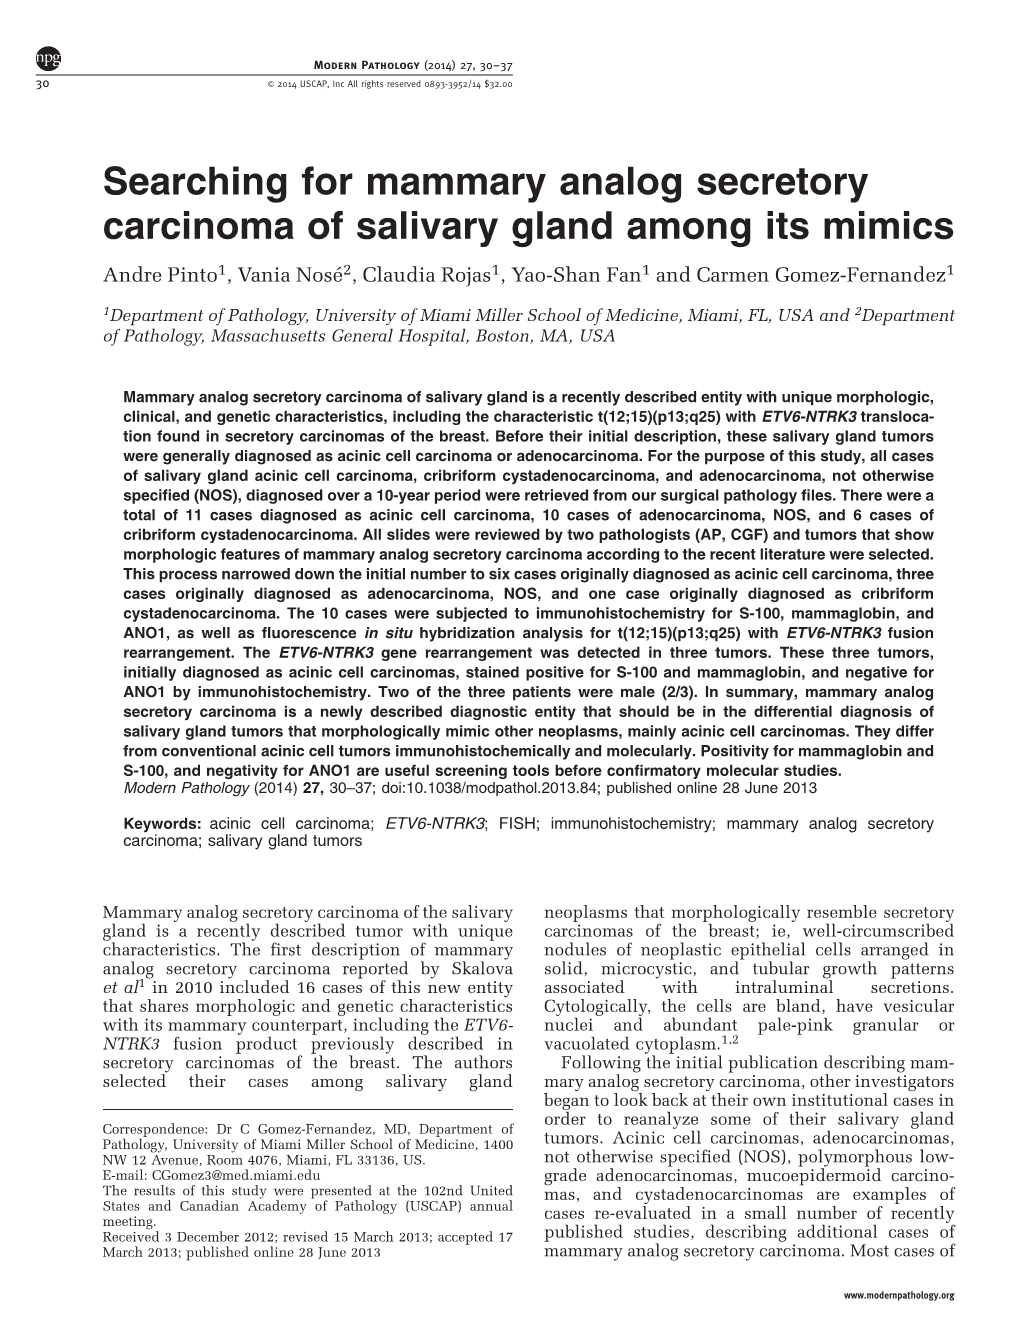 Searching for Mammary Analog Secretory Carcinoma of Salivary Gland Among Its Mimics